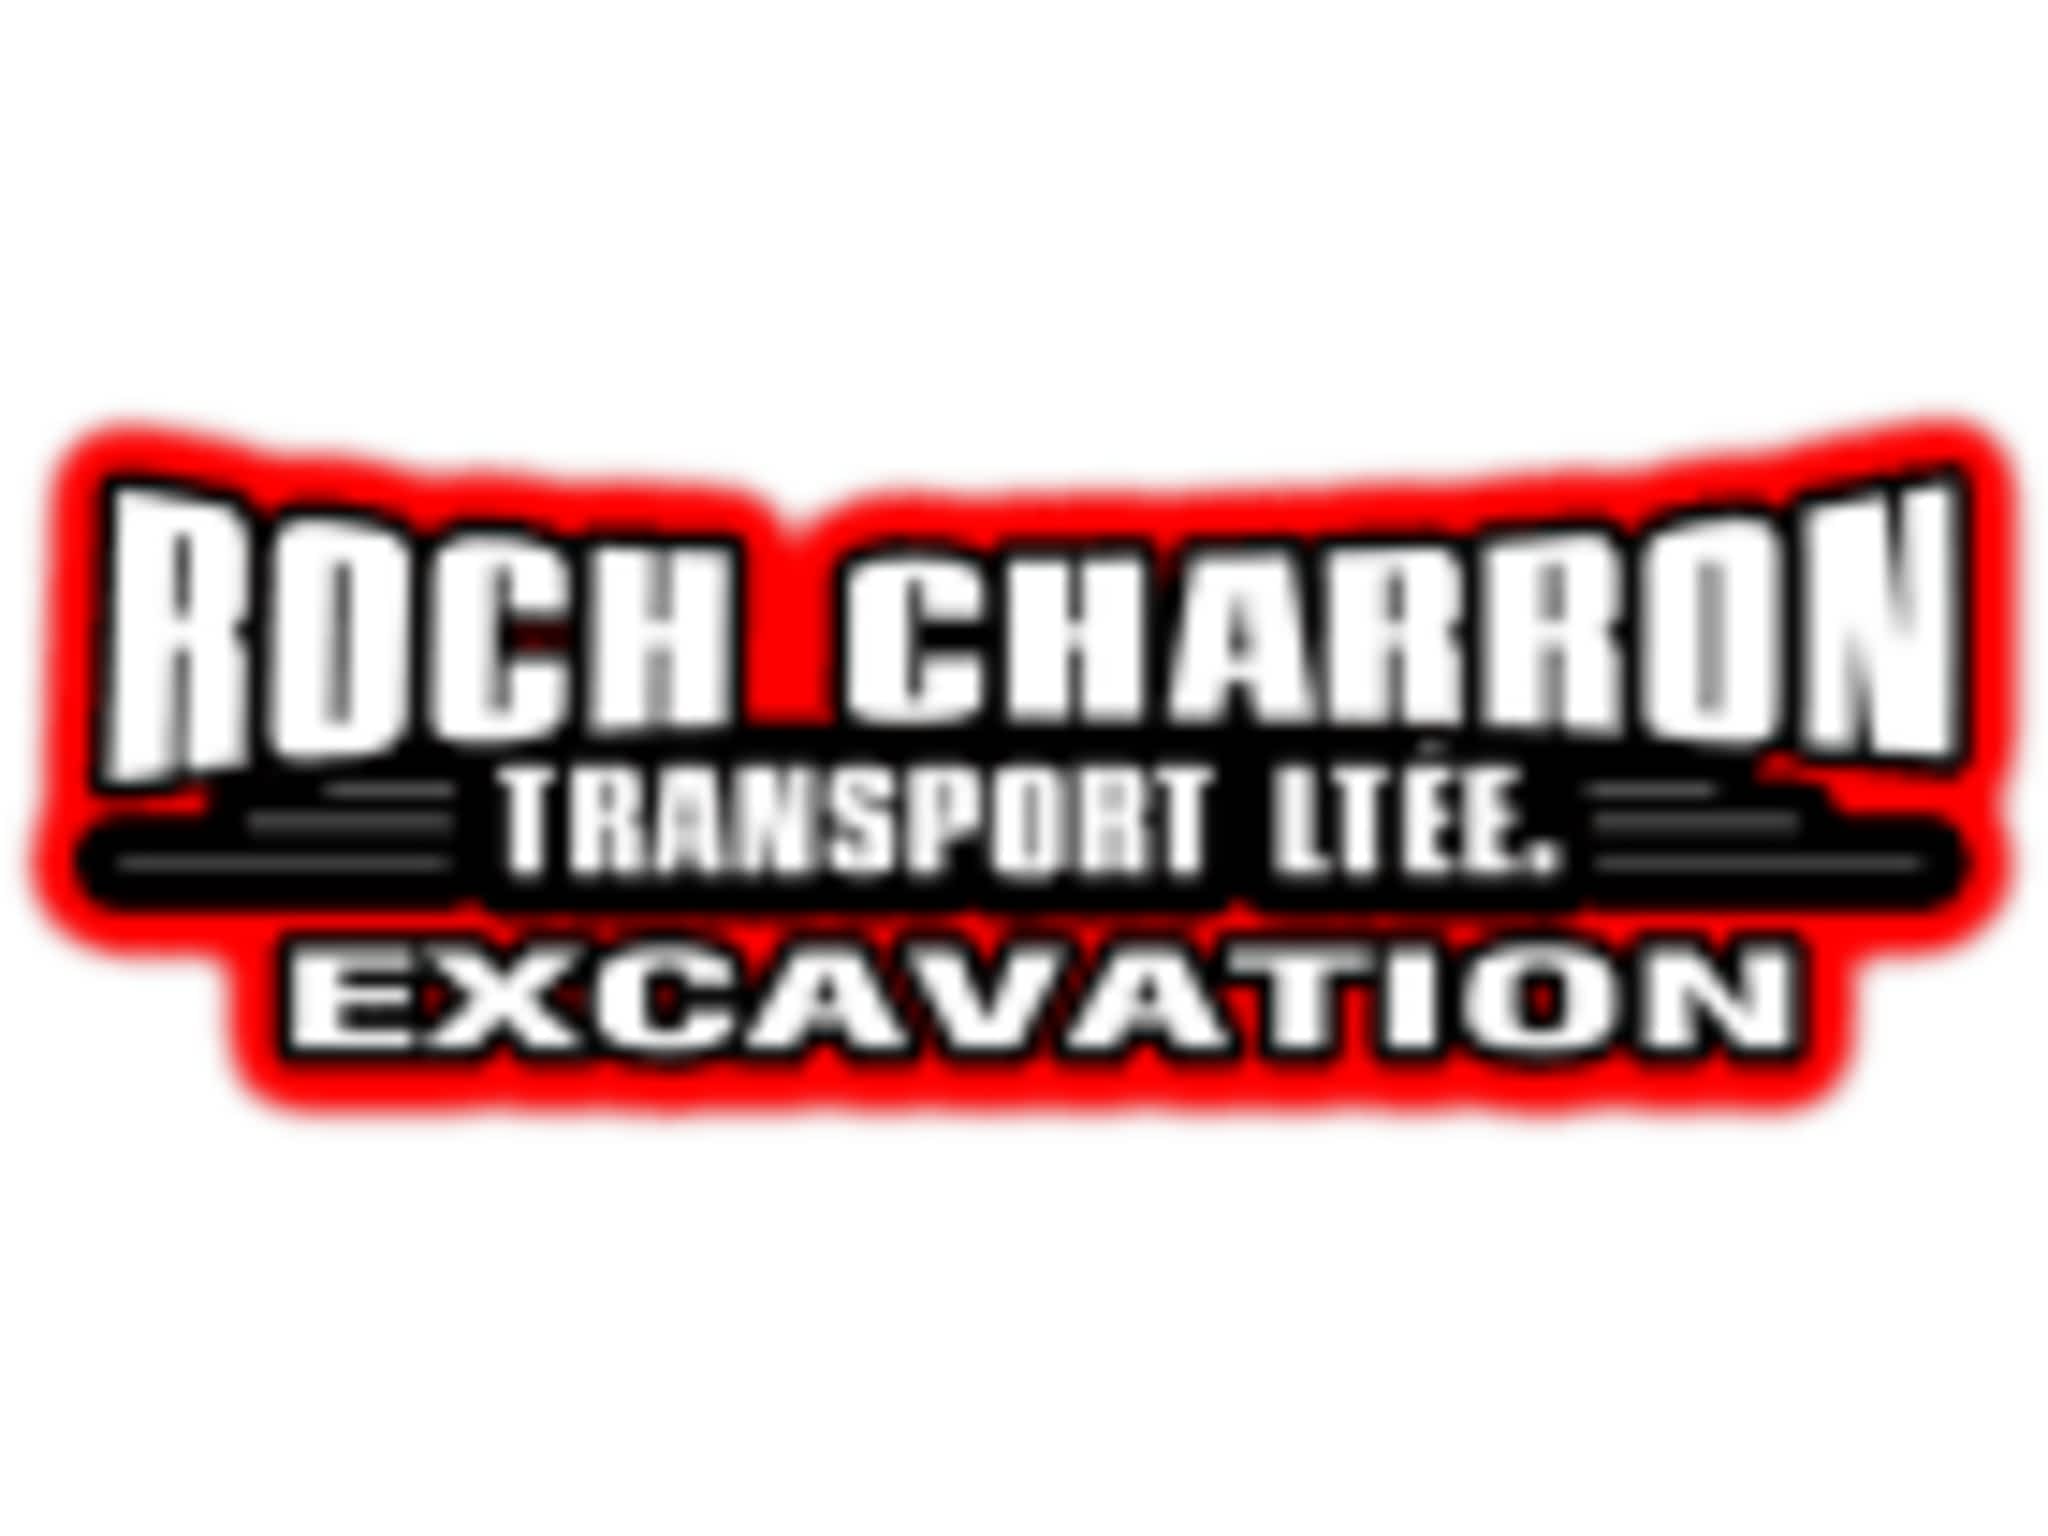 photo Roch Charron Transport Ltd